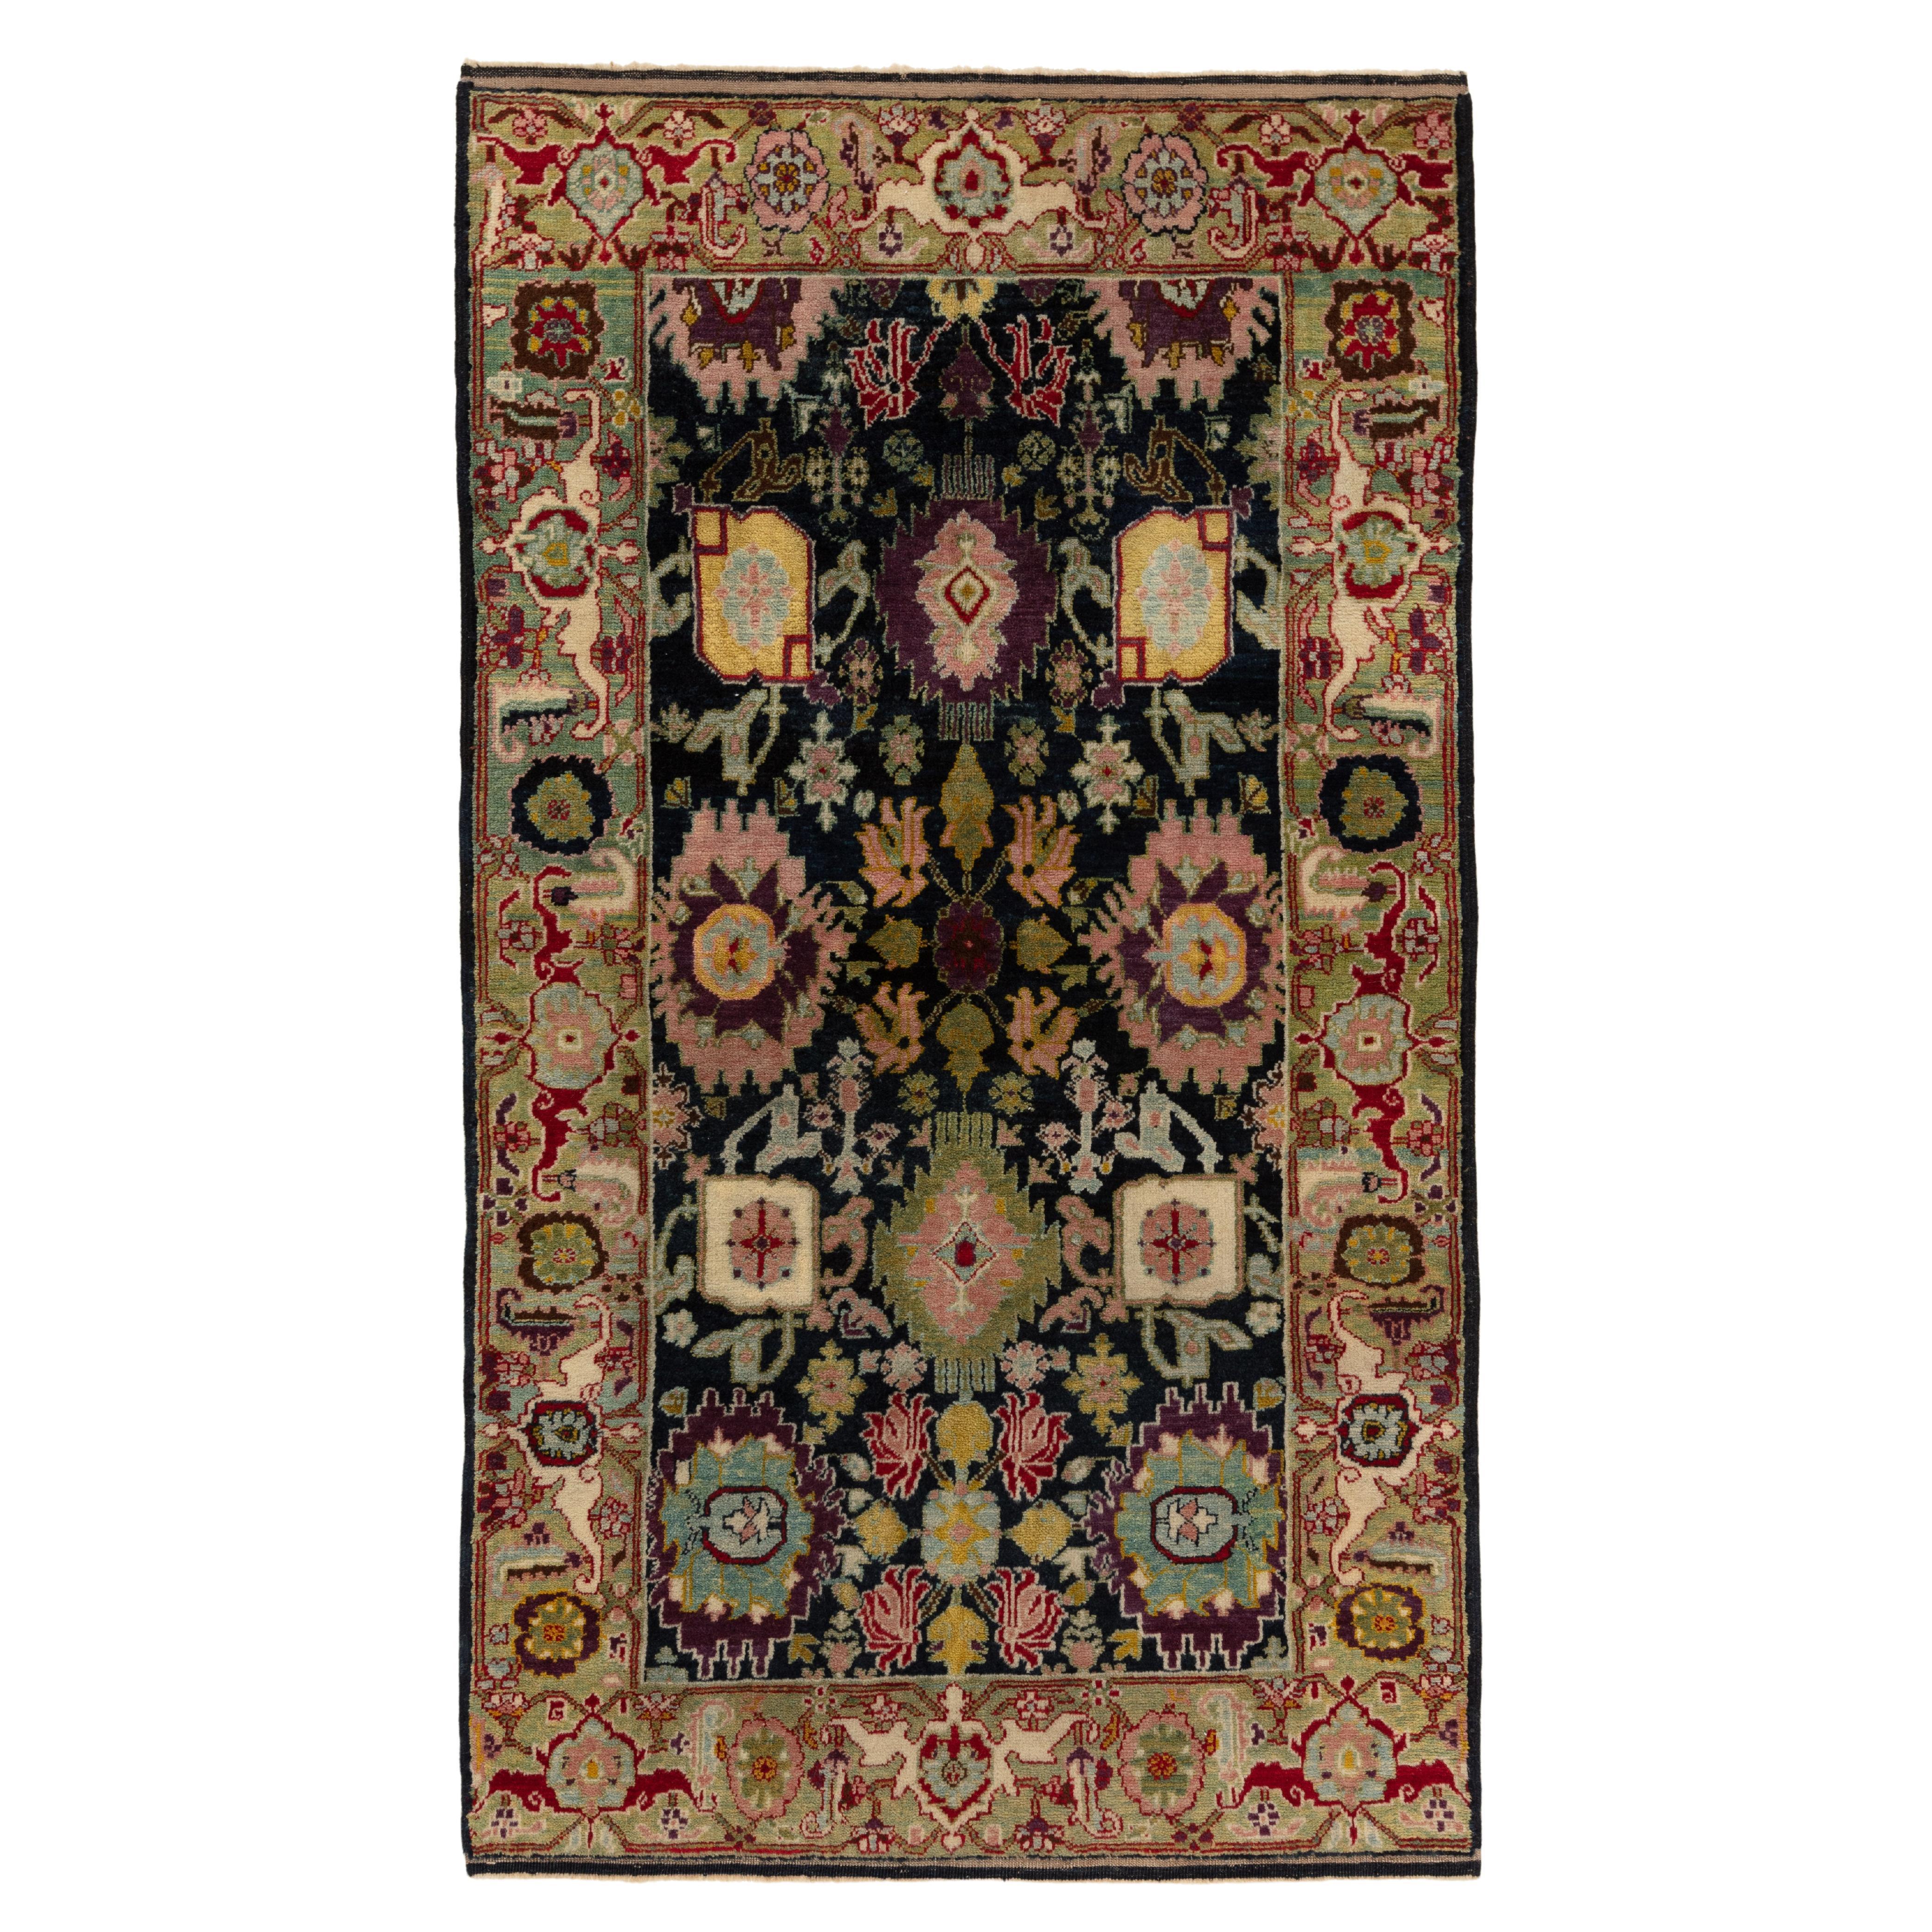 Ararat Rugs Palmettes and Flowers Lattice Rug Antique Persian Revival Carpet For Sale